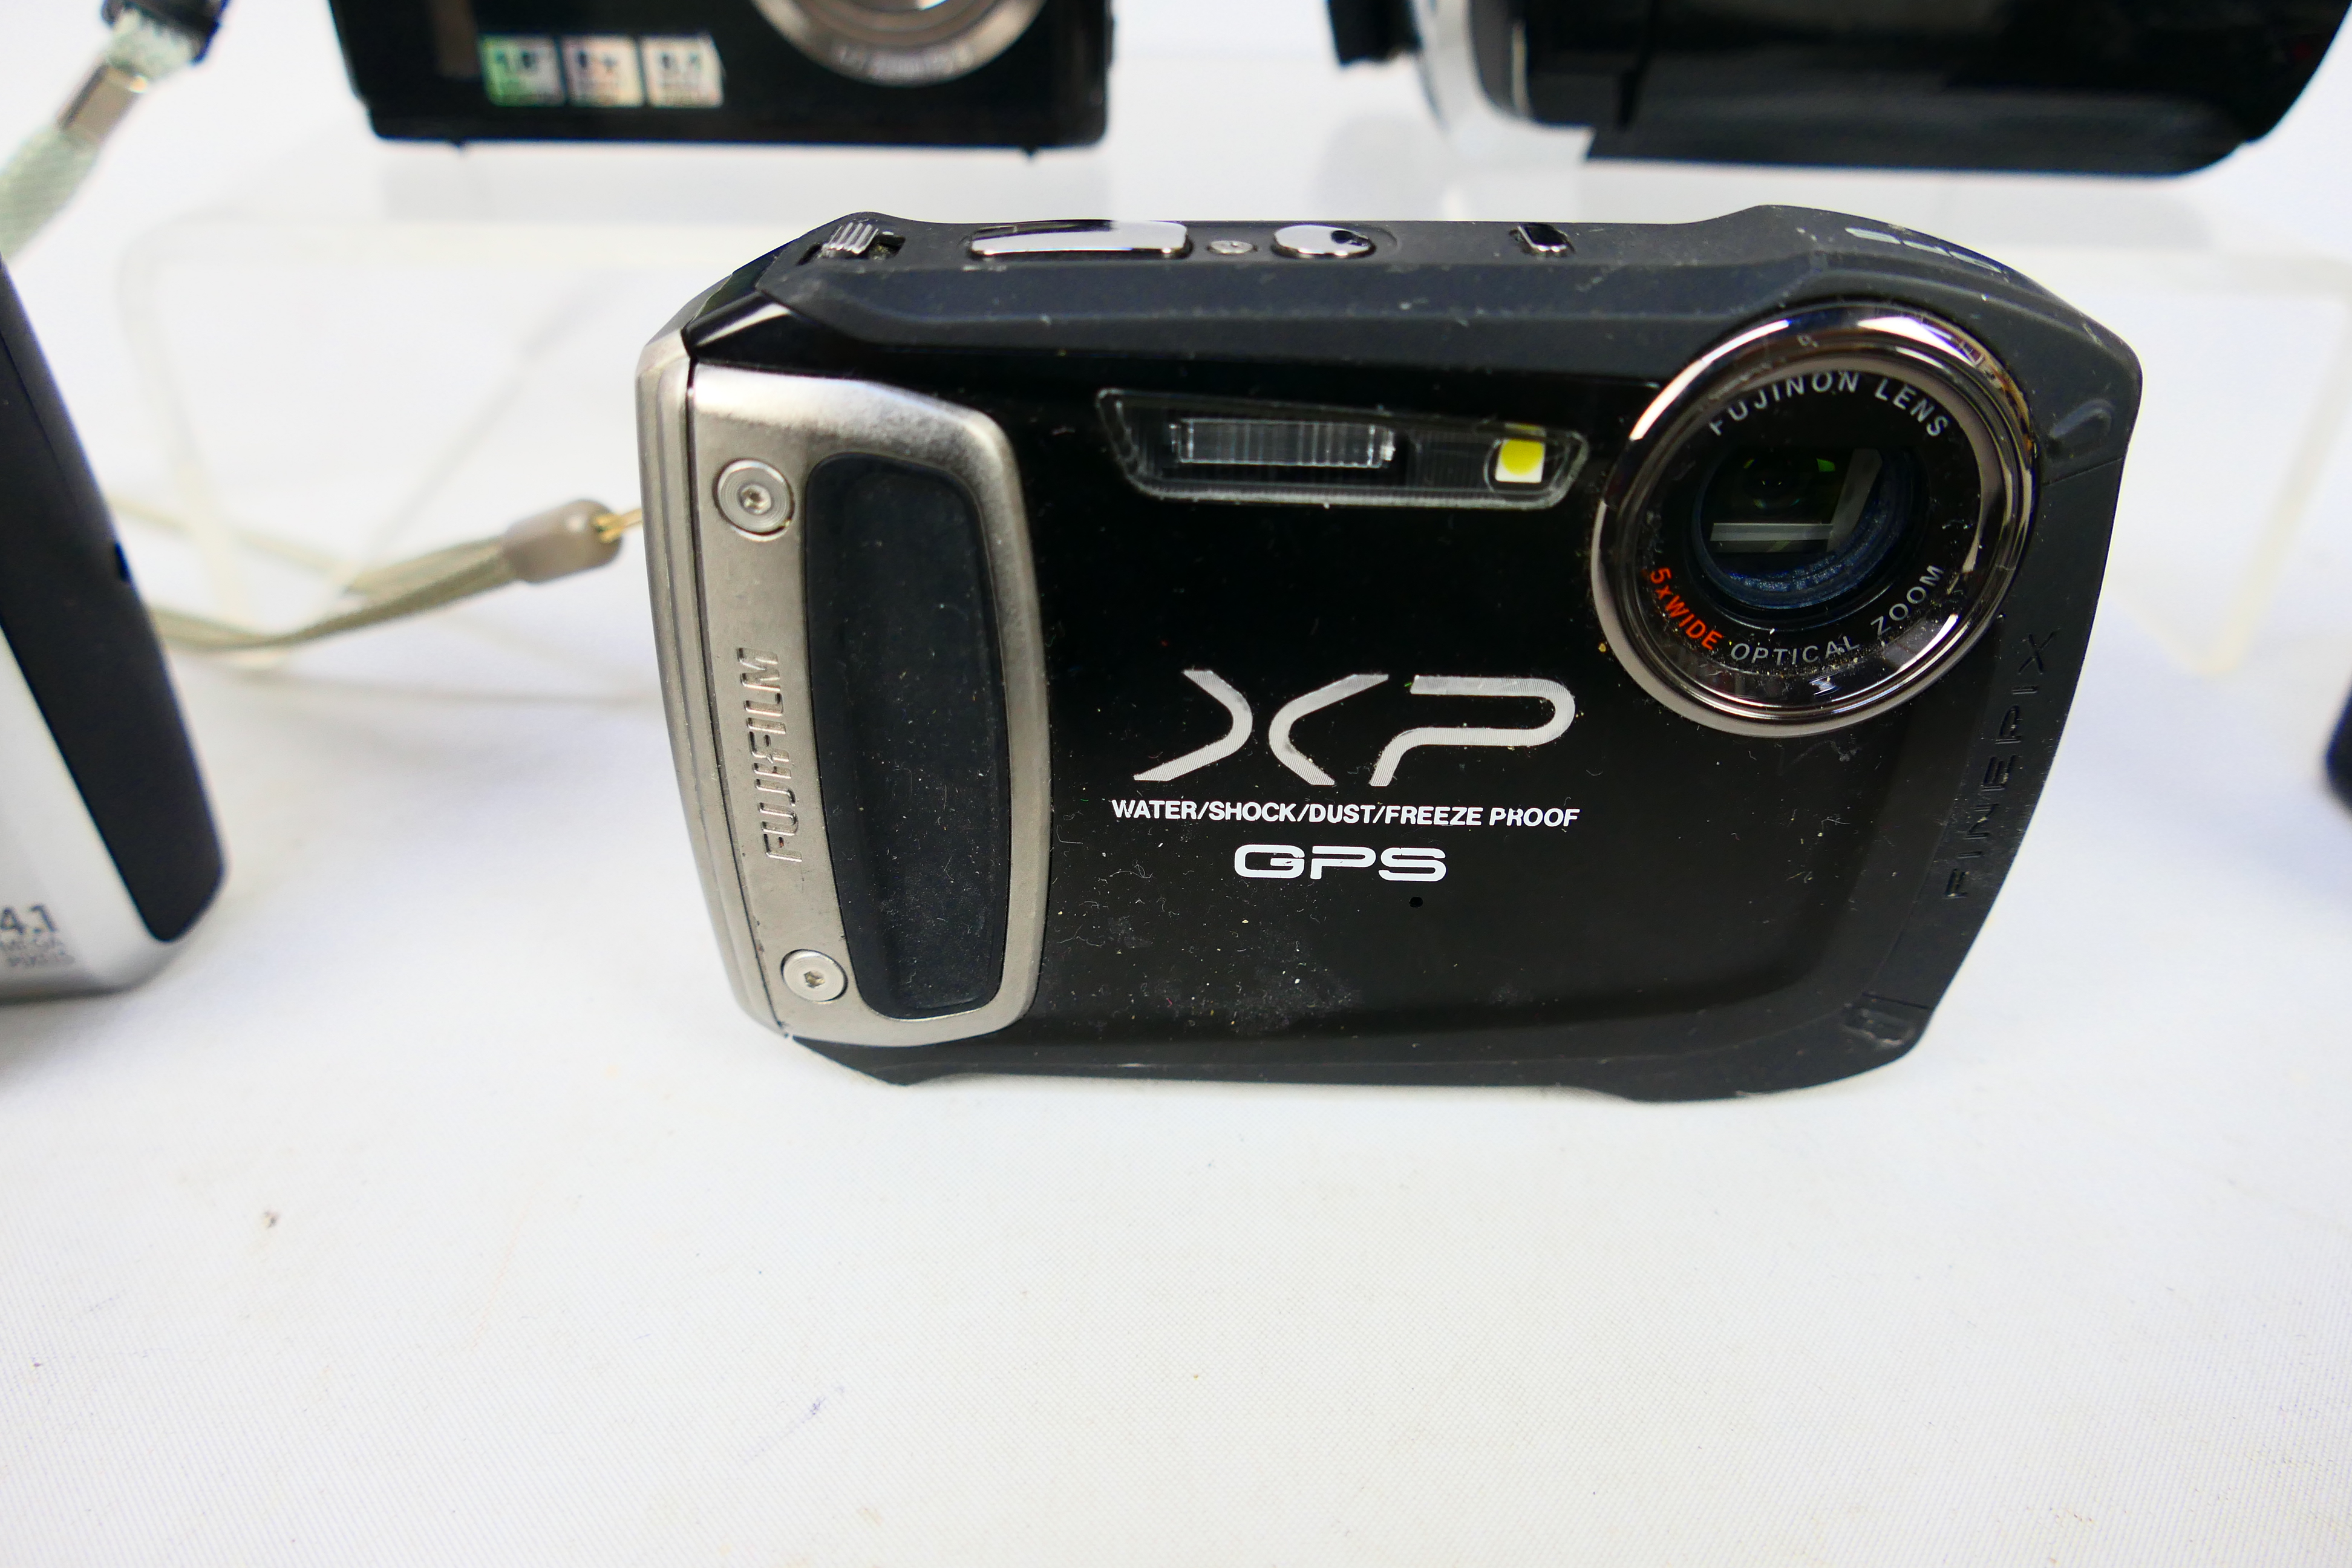 Canon, Nikon, Panasonic, Lumix, Vivitar, Fujifilm - 6 x cameras - Lot includes a Nikon Coolpix L120. - Image 4 of 6